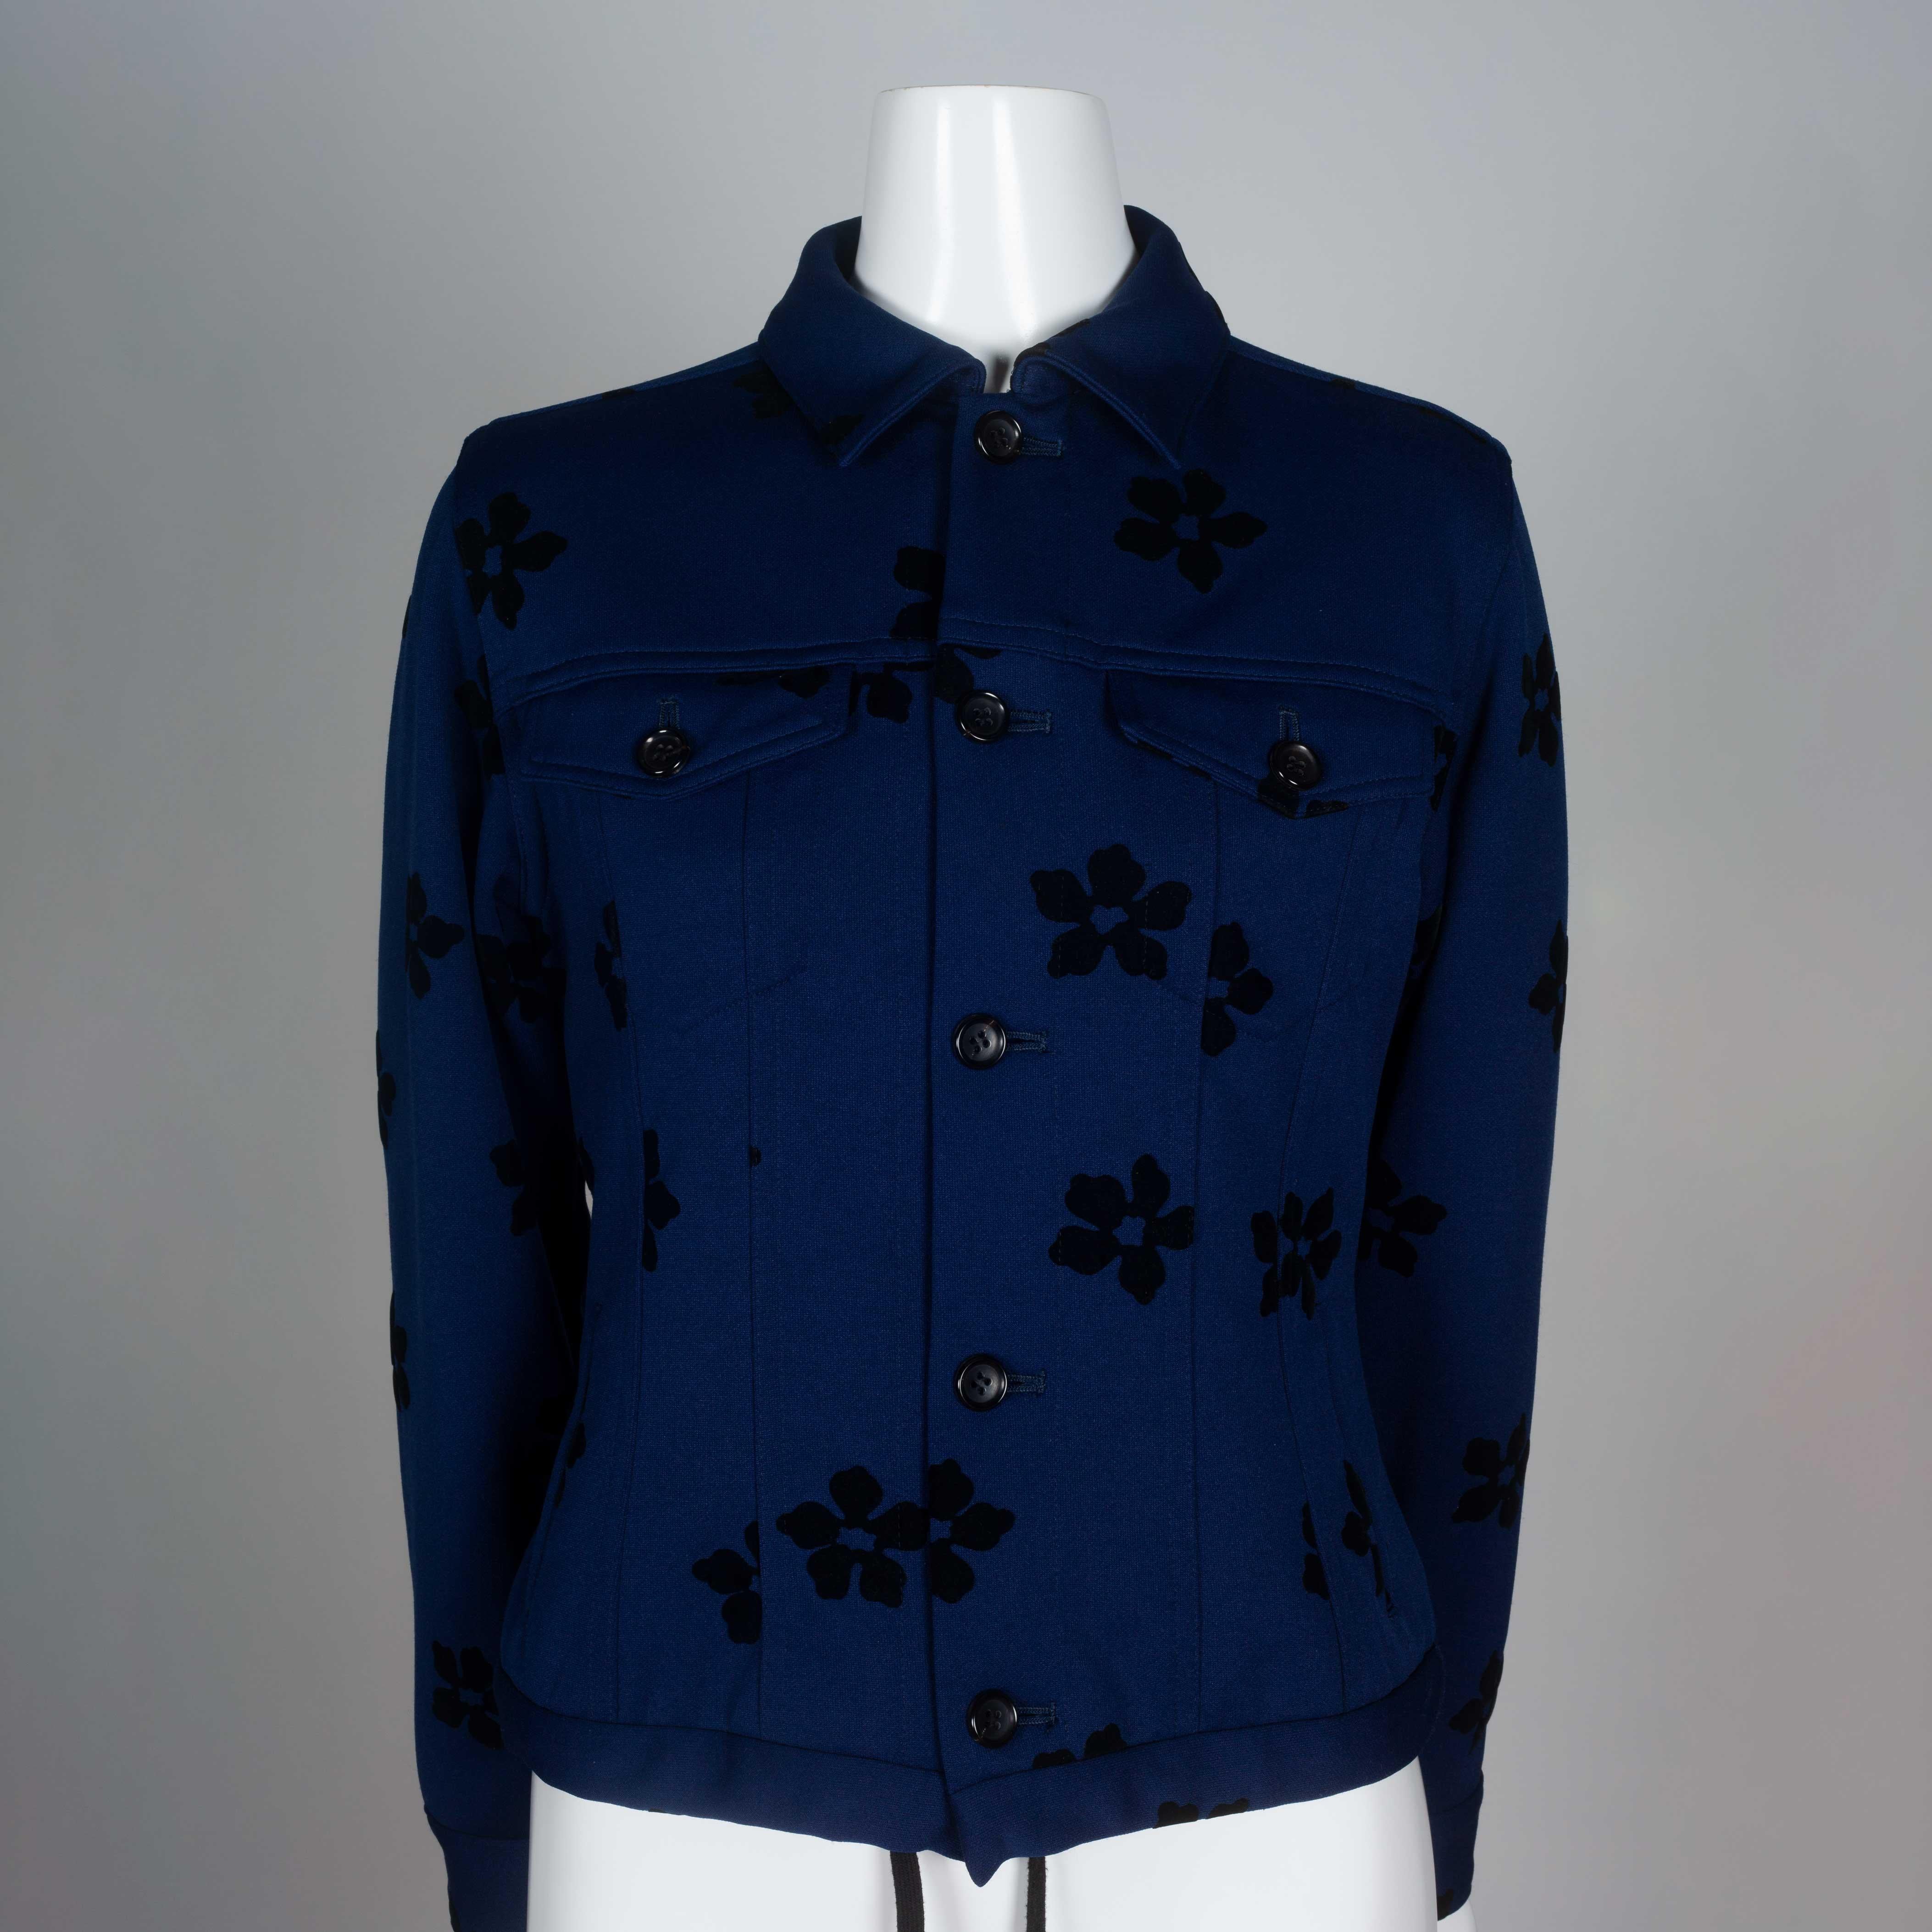 Comme des Garçons Robe de Chambre 2003 deep blue cropped jacket with black velvet flowers. The crisp lines of this classic jacket offset by the soft velvet flowers. 

YEAR: Unknown
MARKED SIZE: L
US WOMEN'S: M
US MEN'S: S
FIT: Regular
CHEST: 18